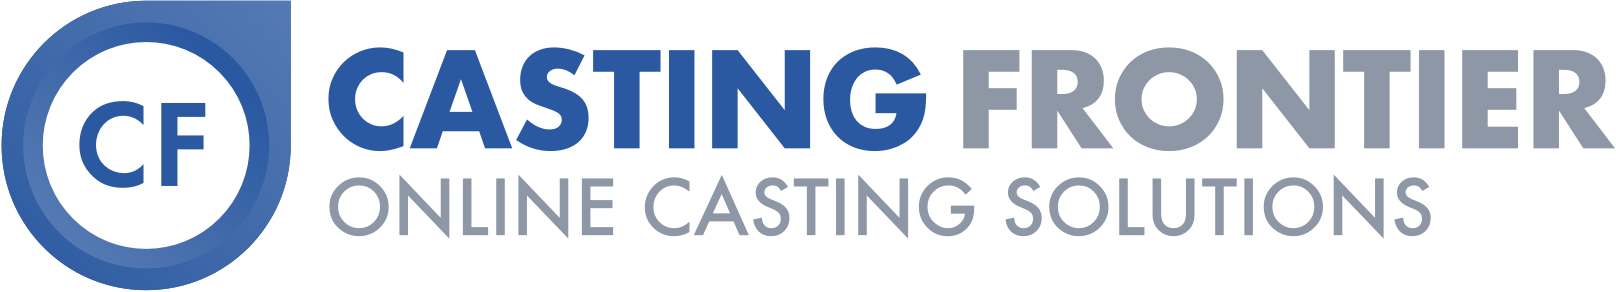 Casting Frontier Logo